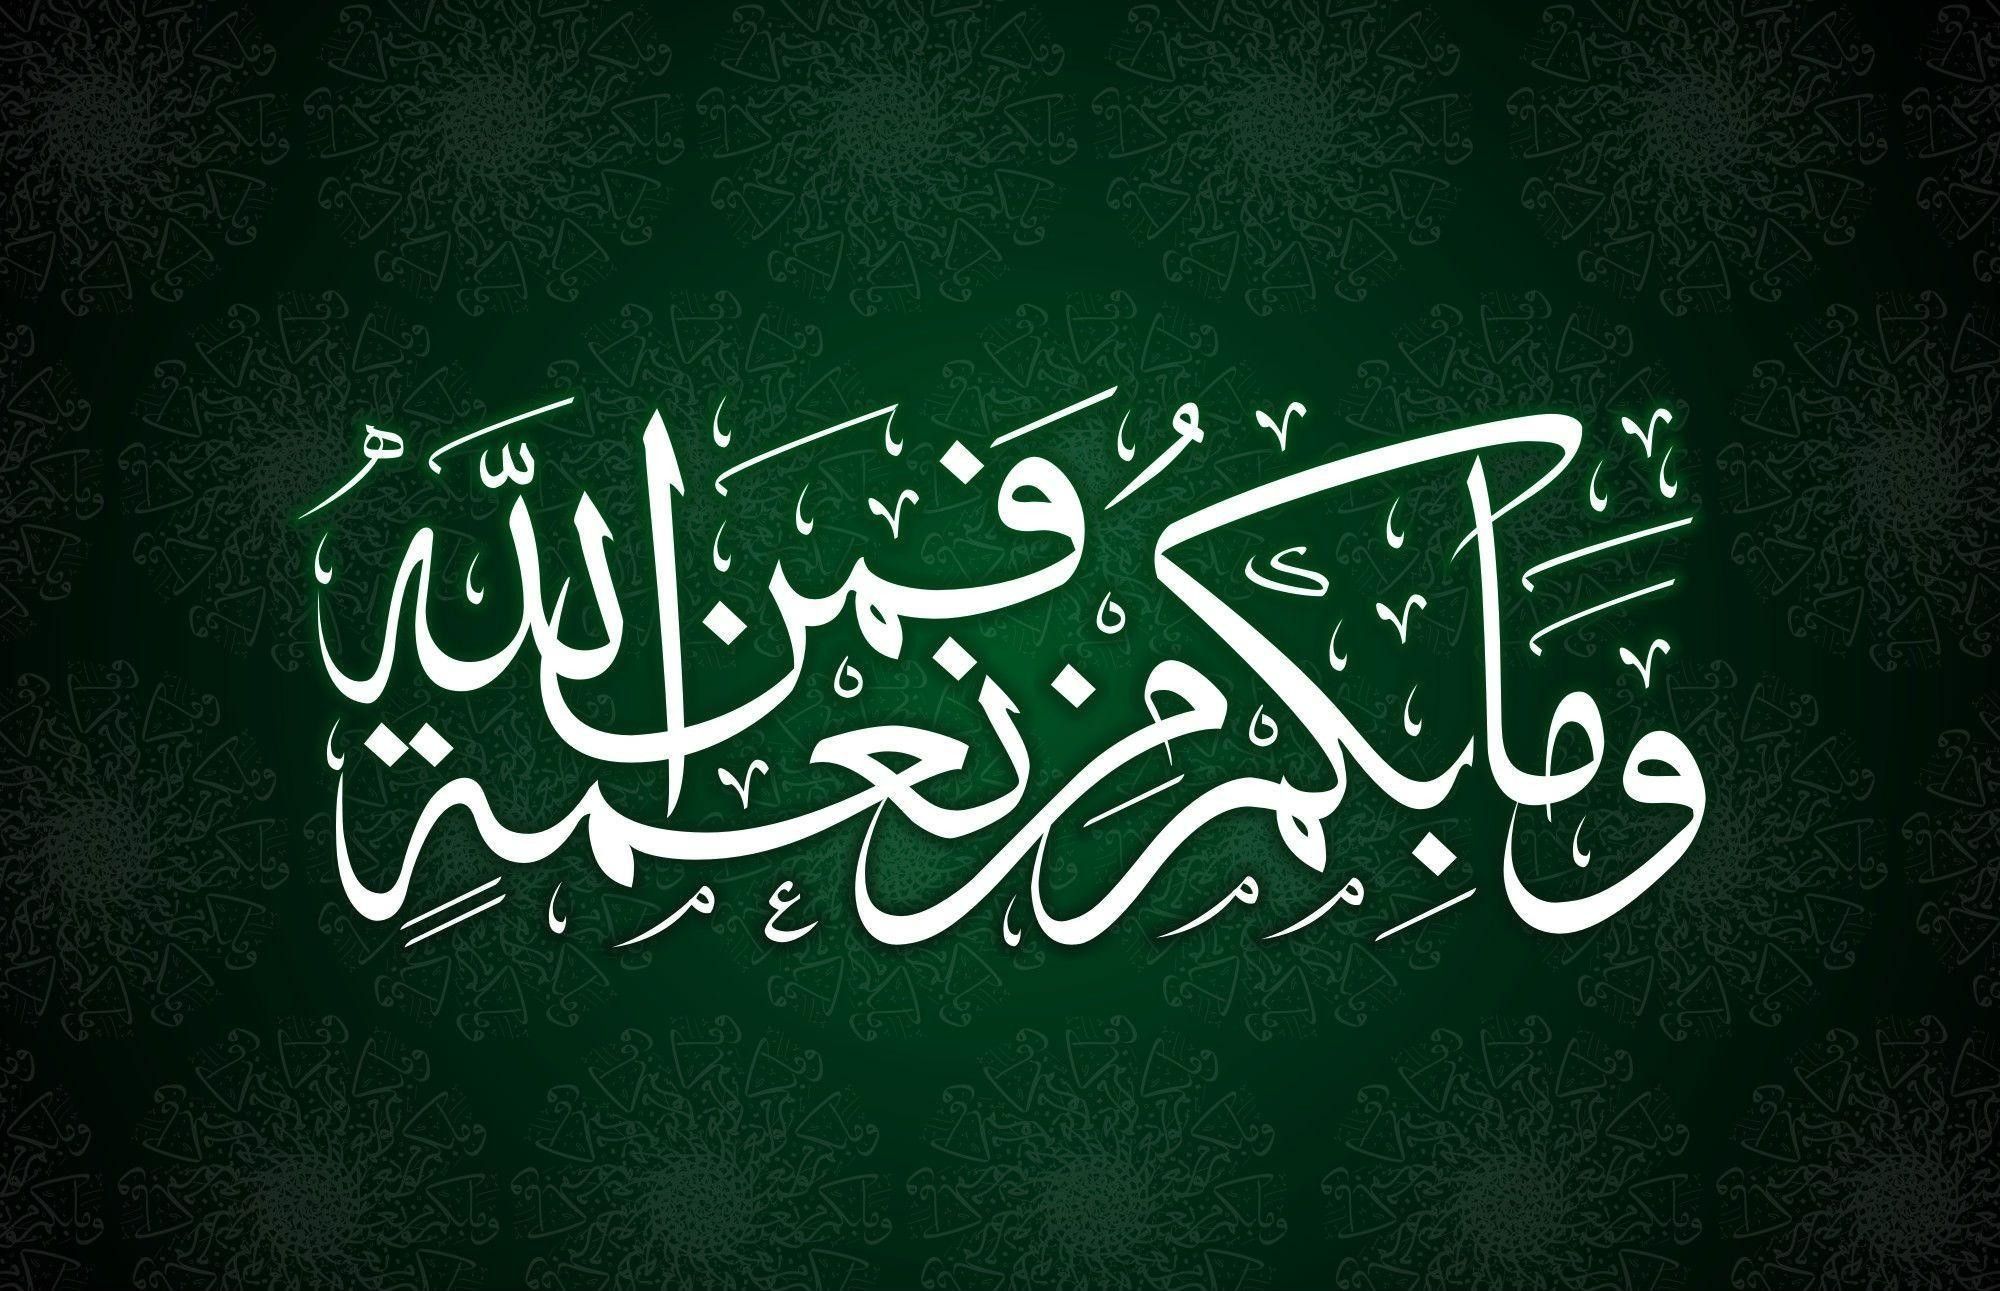 Islamic Calligraphy Wallpaper HD - WallpaperSafari | Calligraphy wallpaper,  Islamic calligraphy, Calligraphy